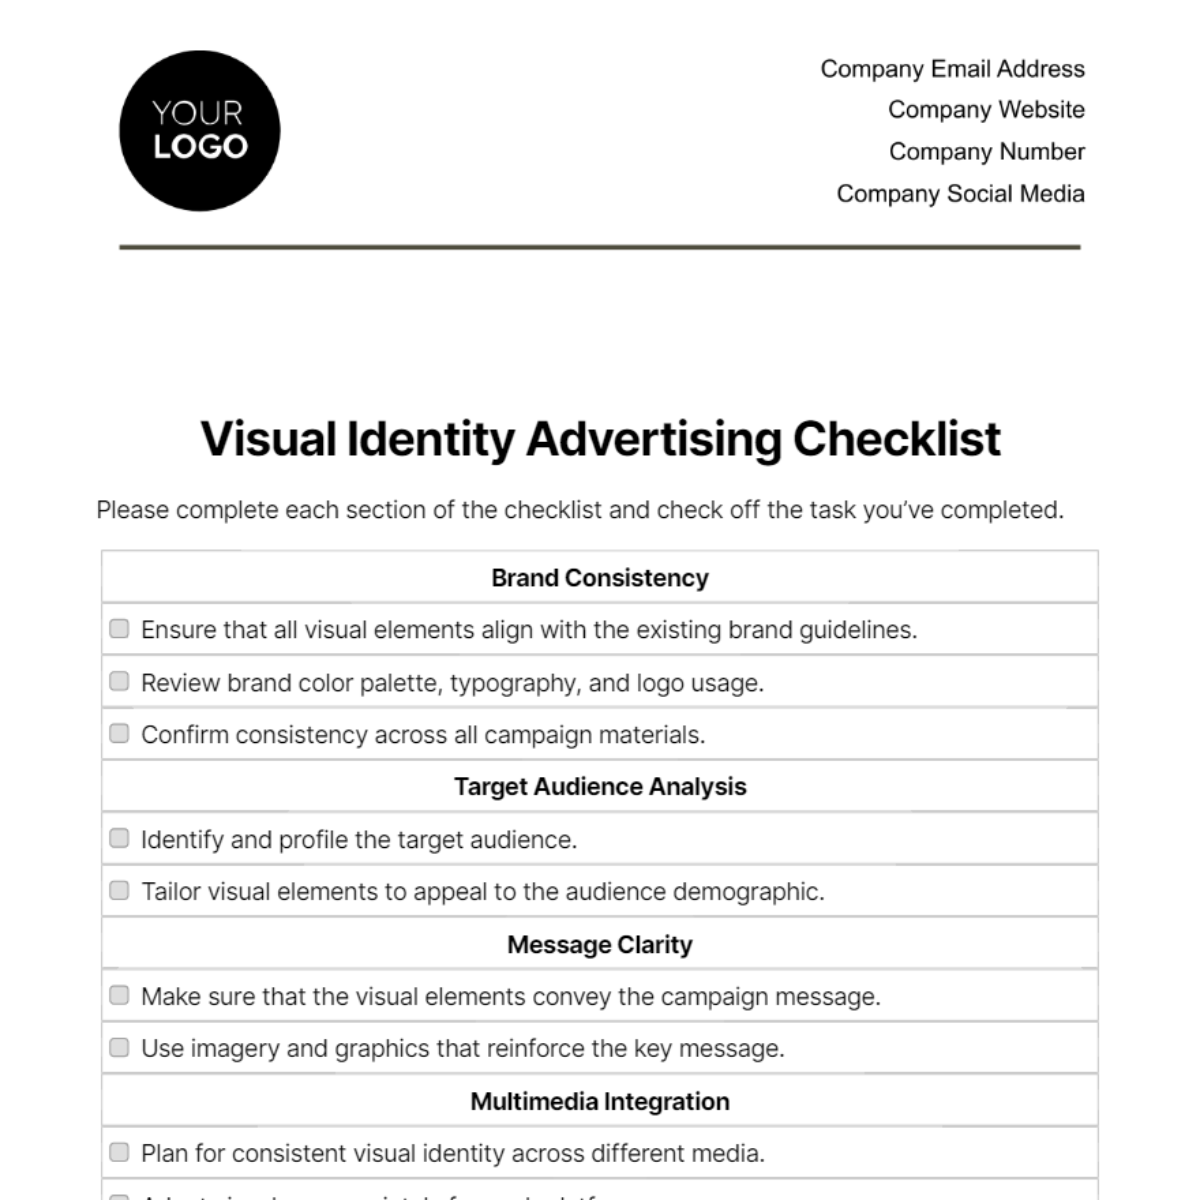 Free Visual Identity Advertising Checklist Template